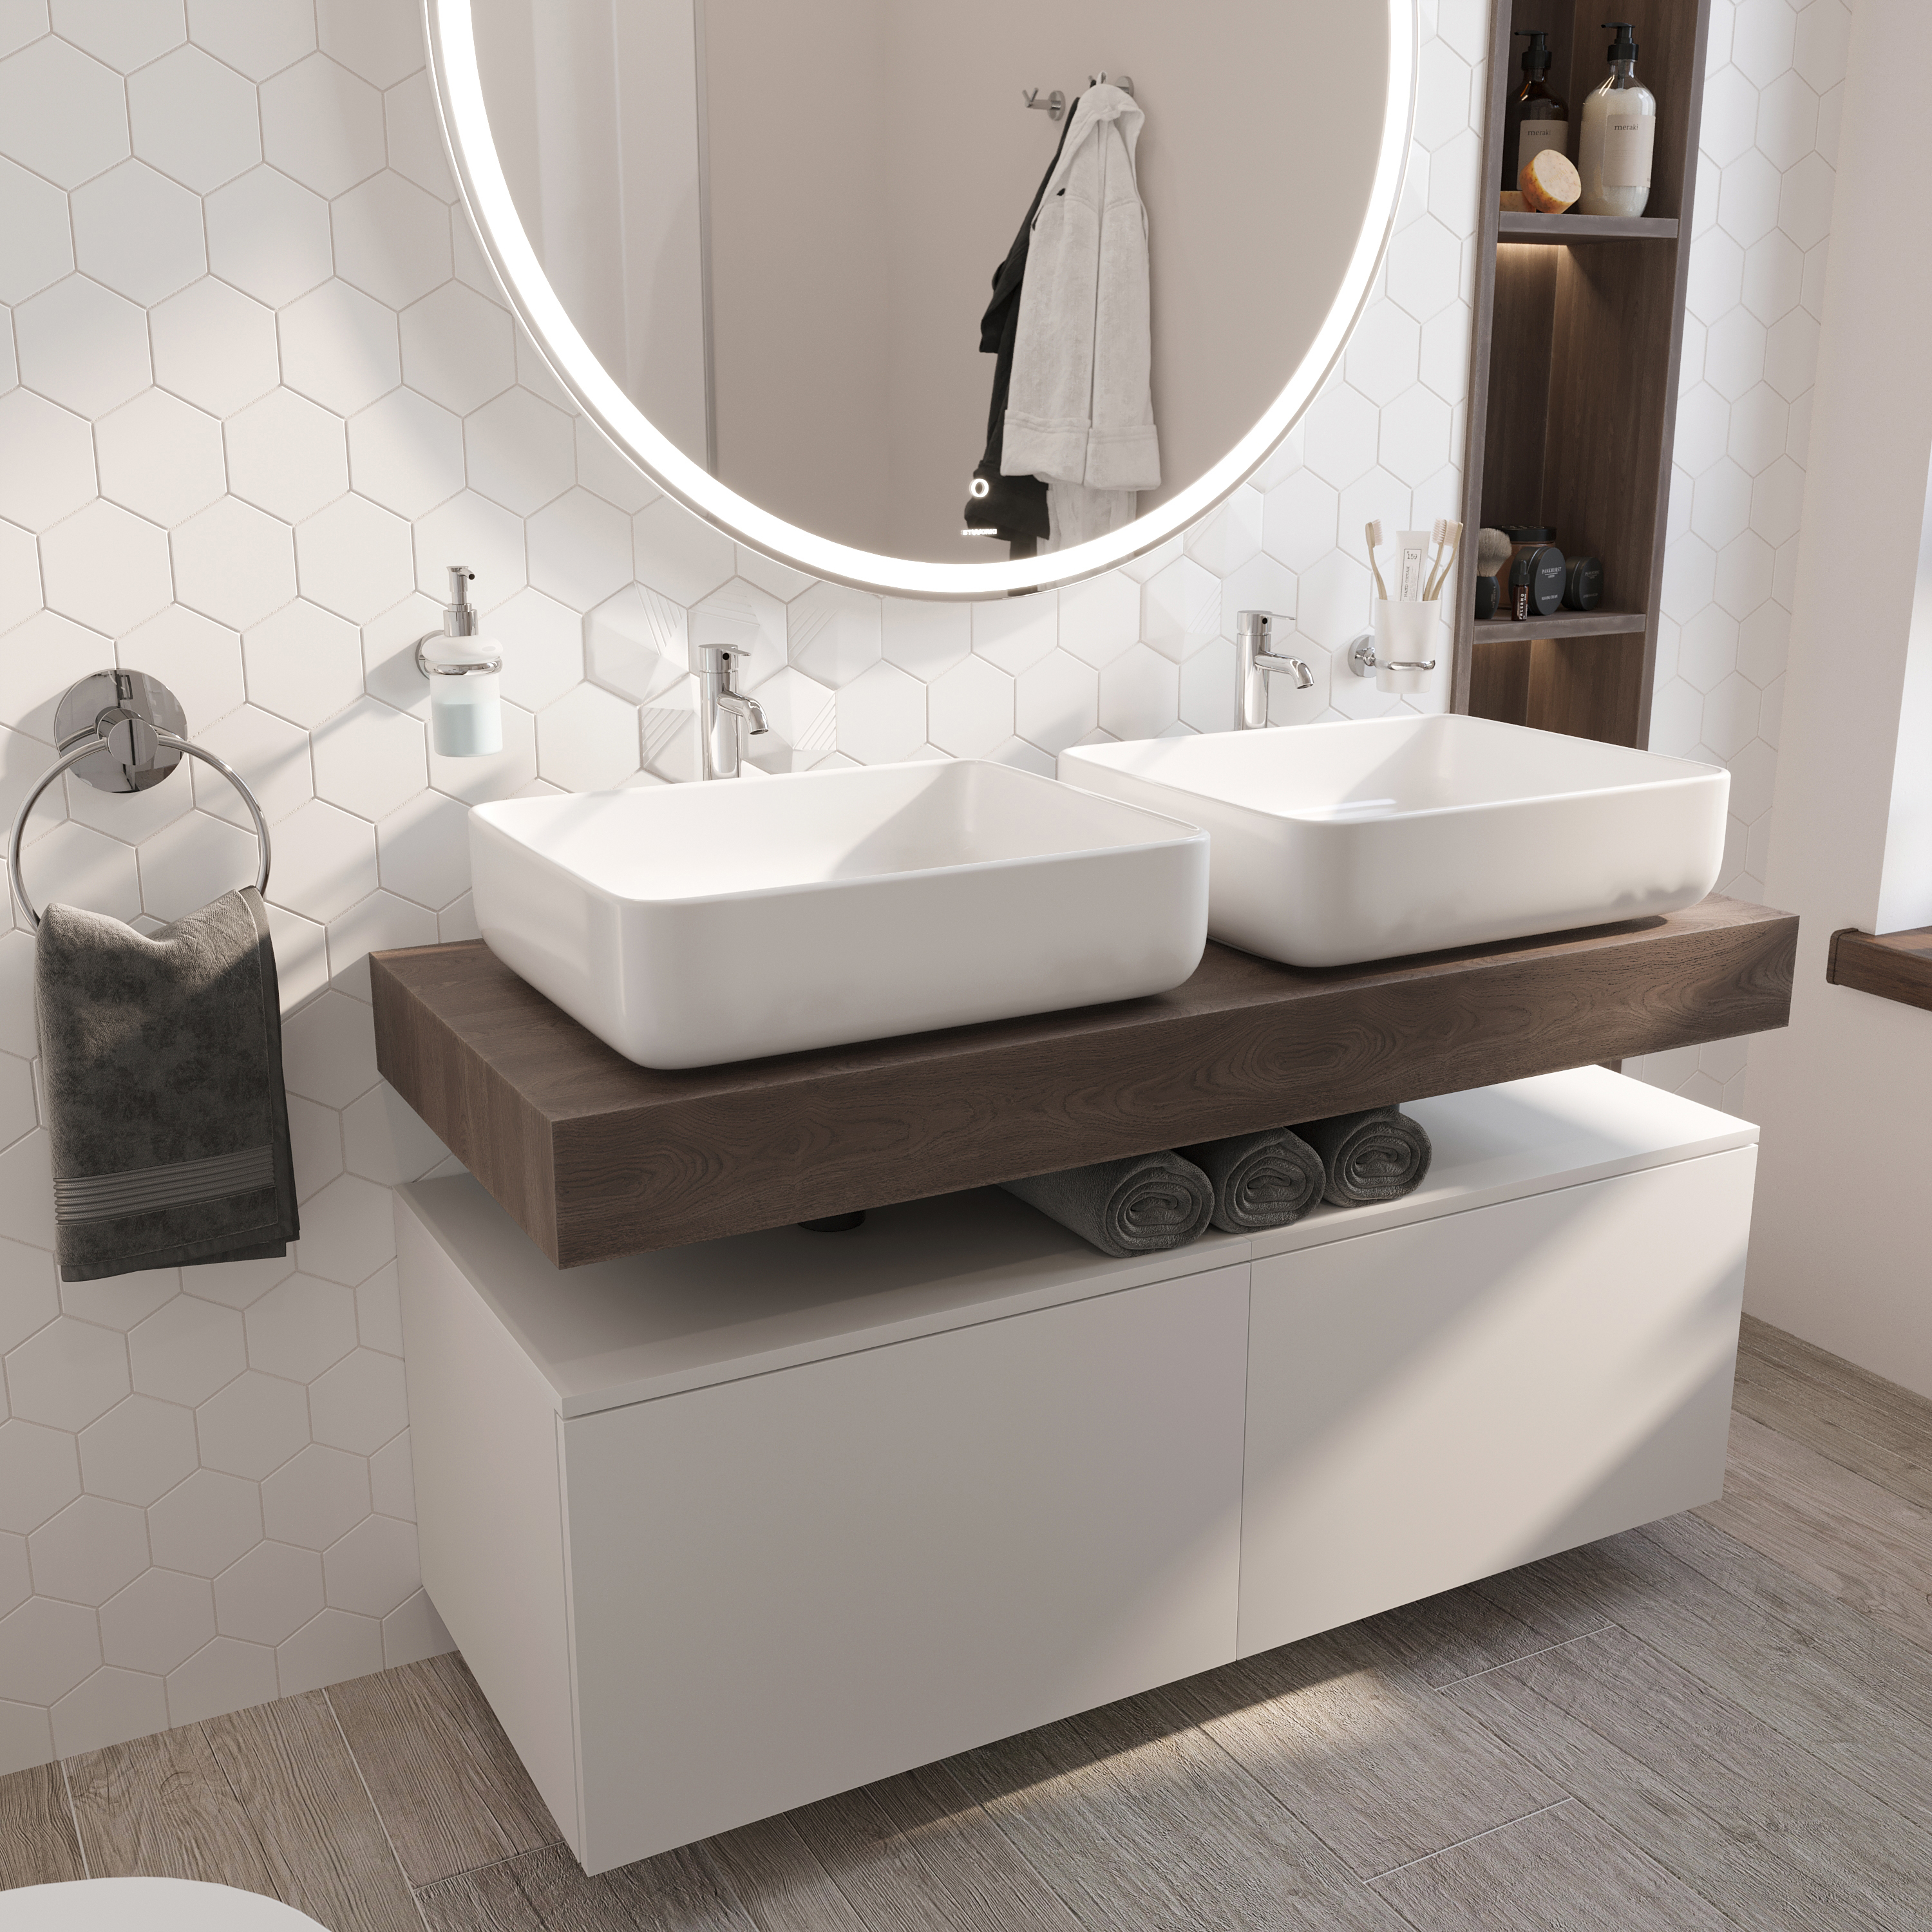 Мебель для ванной STWORKI Ольборг 120 столешница дуб карпентер, без отверстий, 2 тумбы 60 + 2 раковины STWORKI Soul 1 белой 489335 - 4